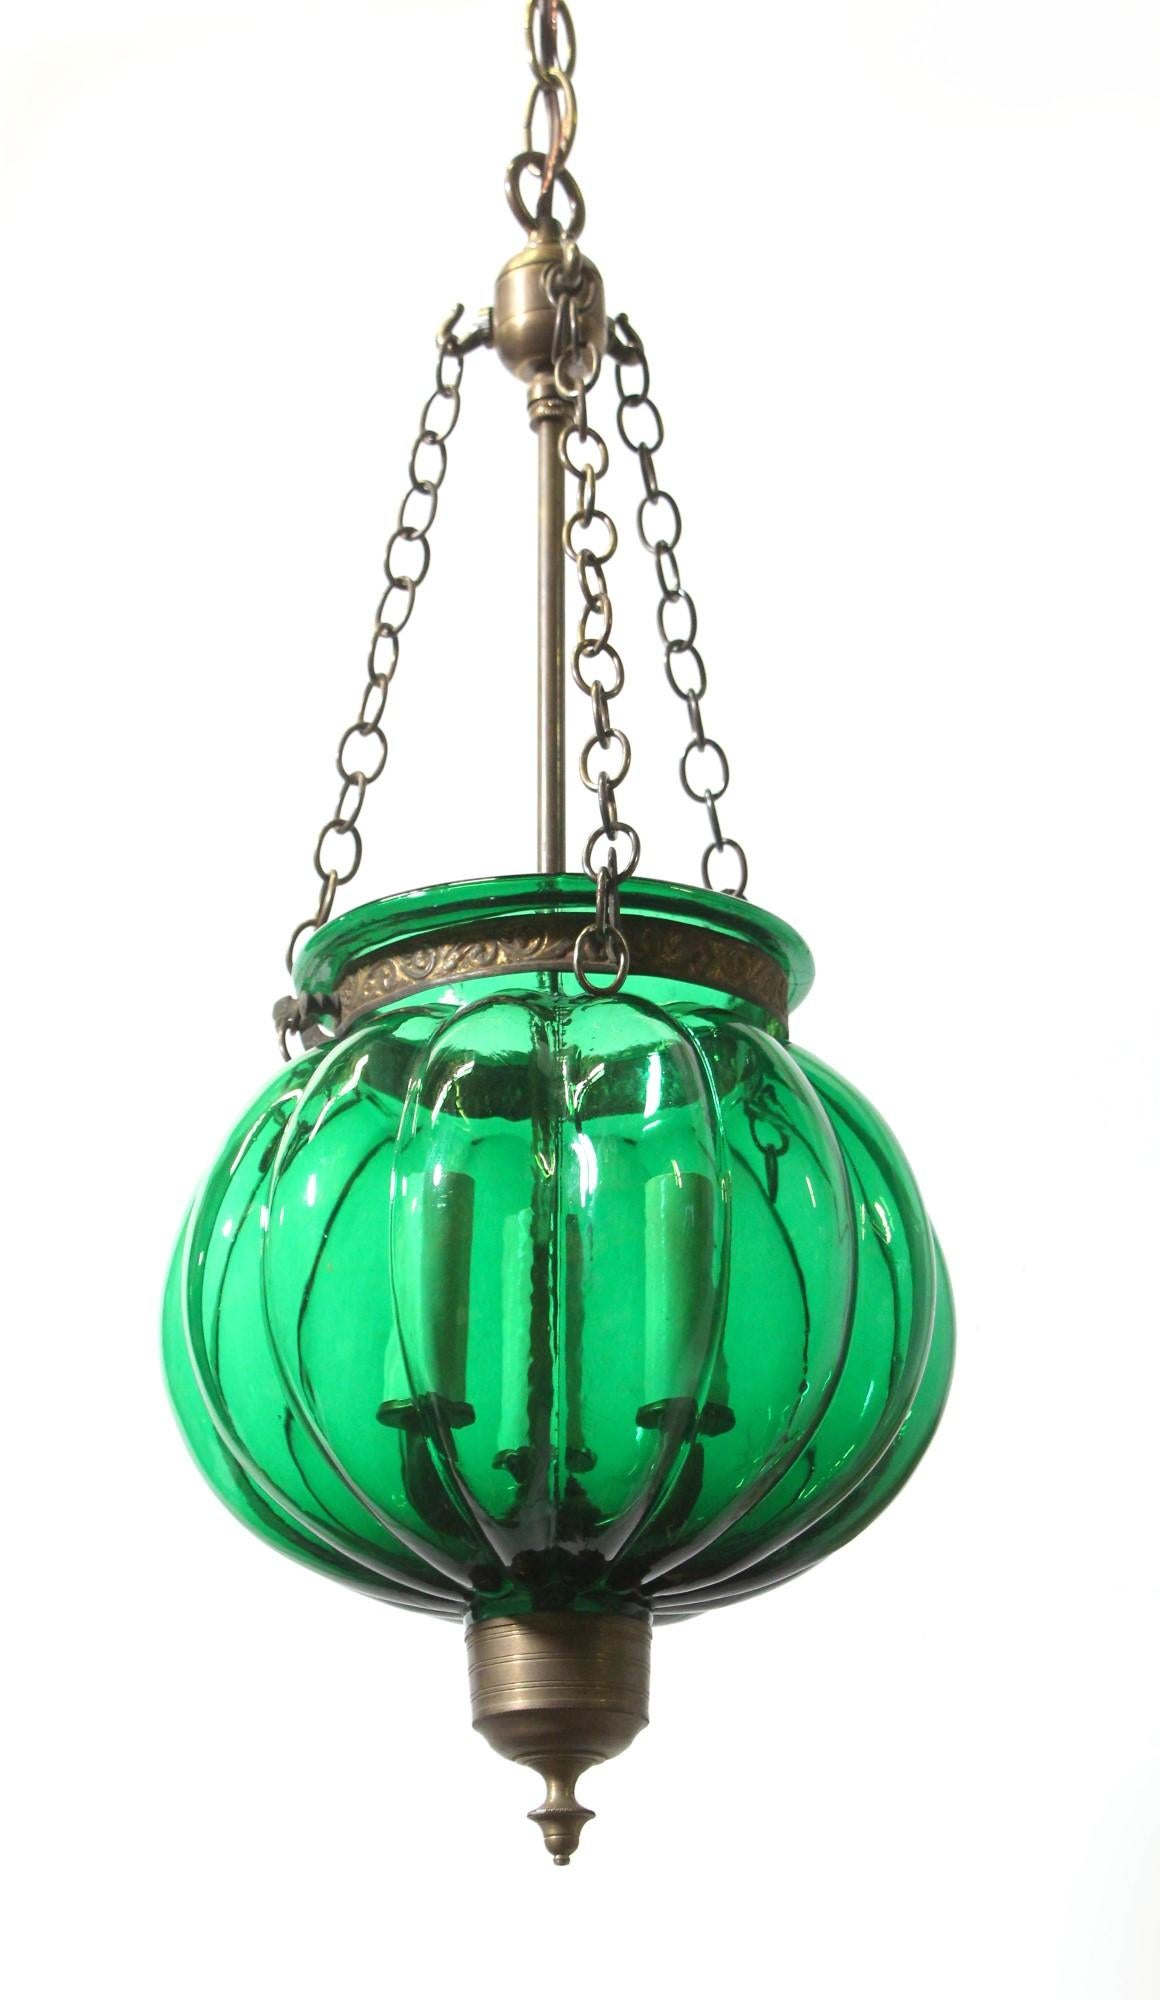 Early 20th century antique original hand blown green glass bell jar pendant light. 